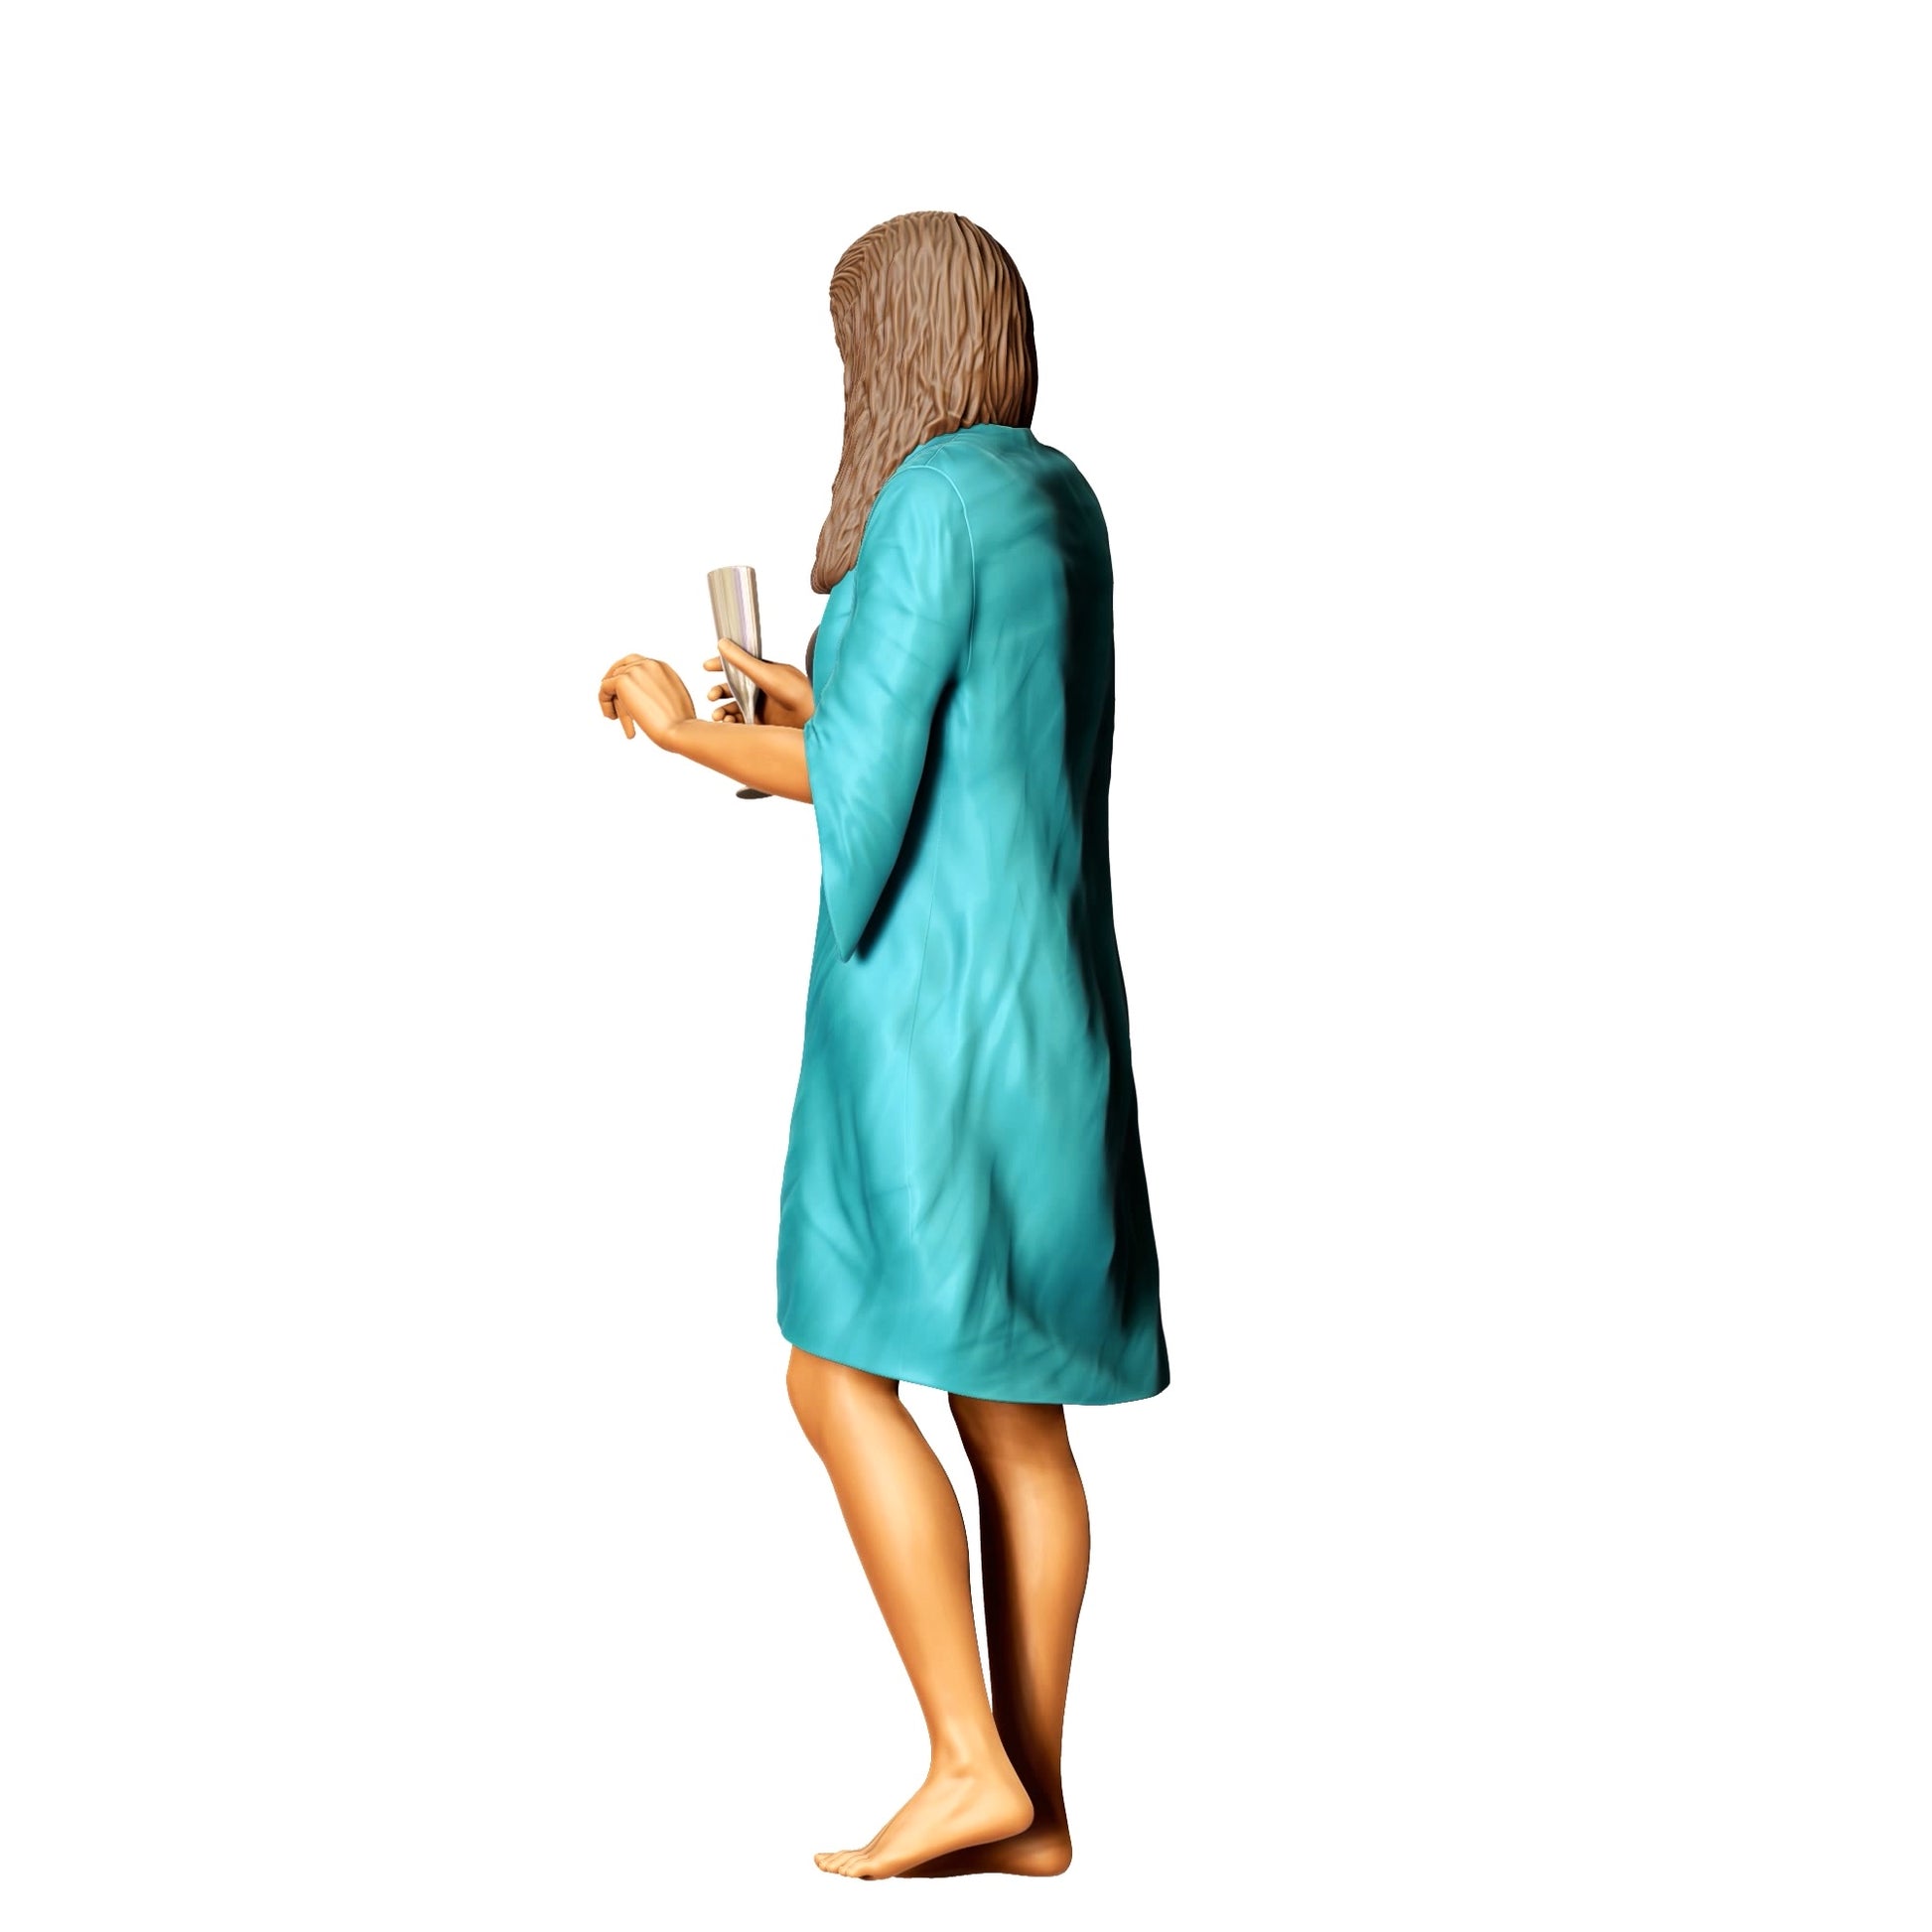 Diorama Modellbau Produktfoto 0: Pool Party Gäste - Frau mit Badeanzug und Sektglas (Ref. Nr. 322)